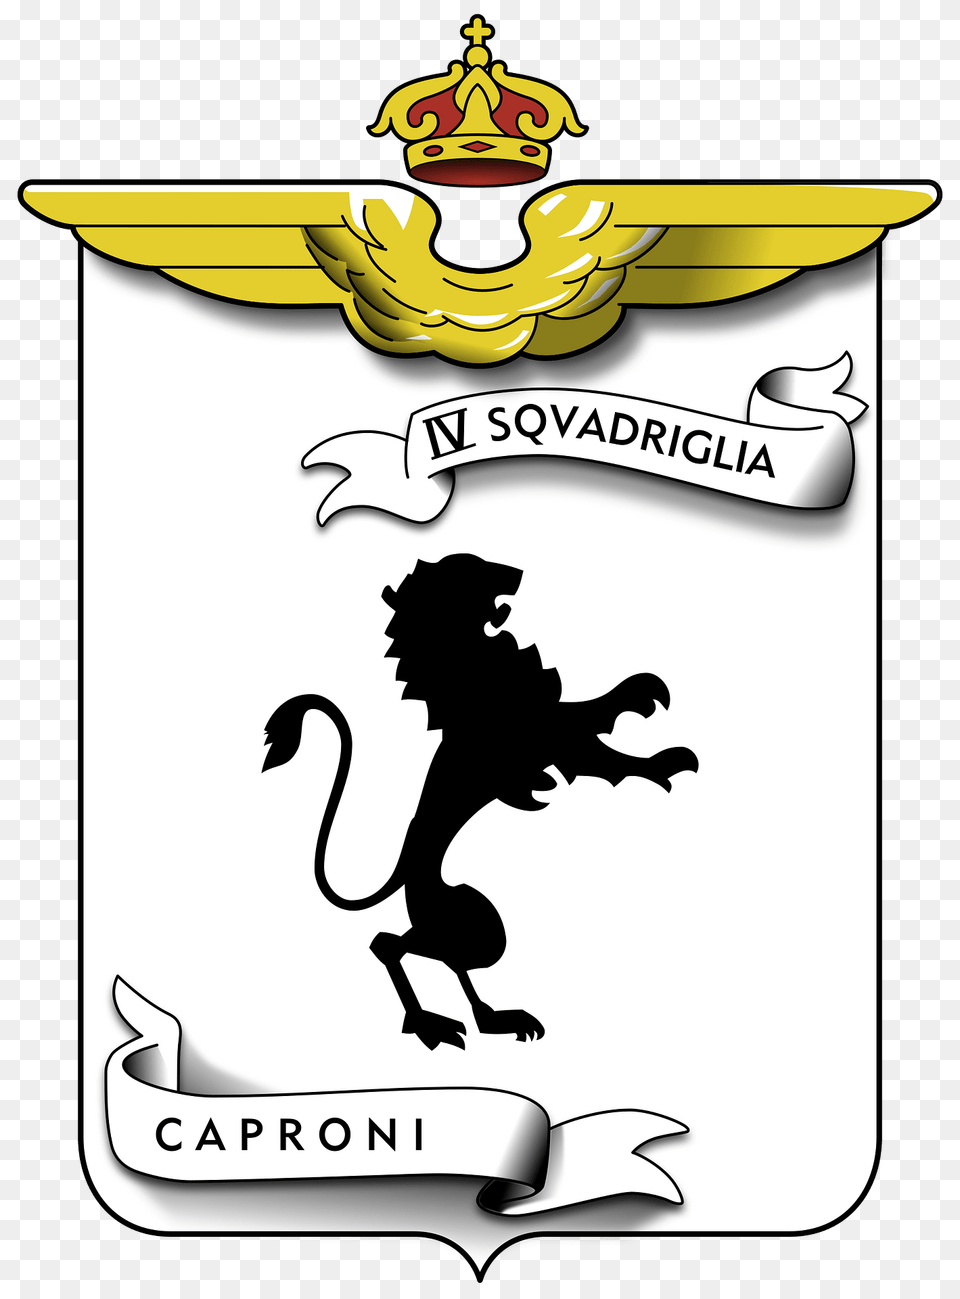 Coa Iv Squadriglia Caproni Clipart, Logo, Person Free Png